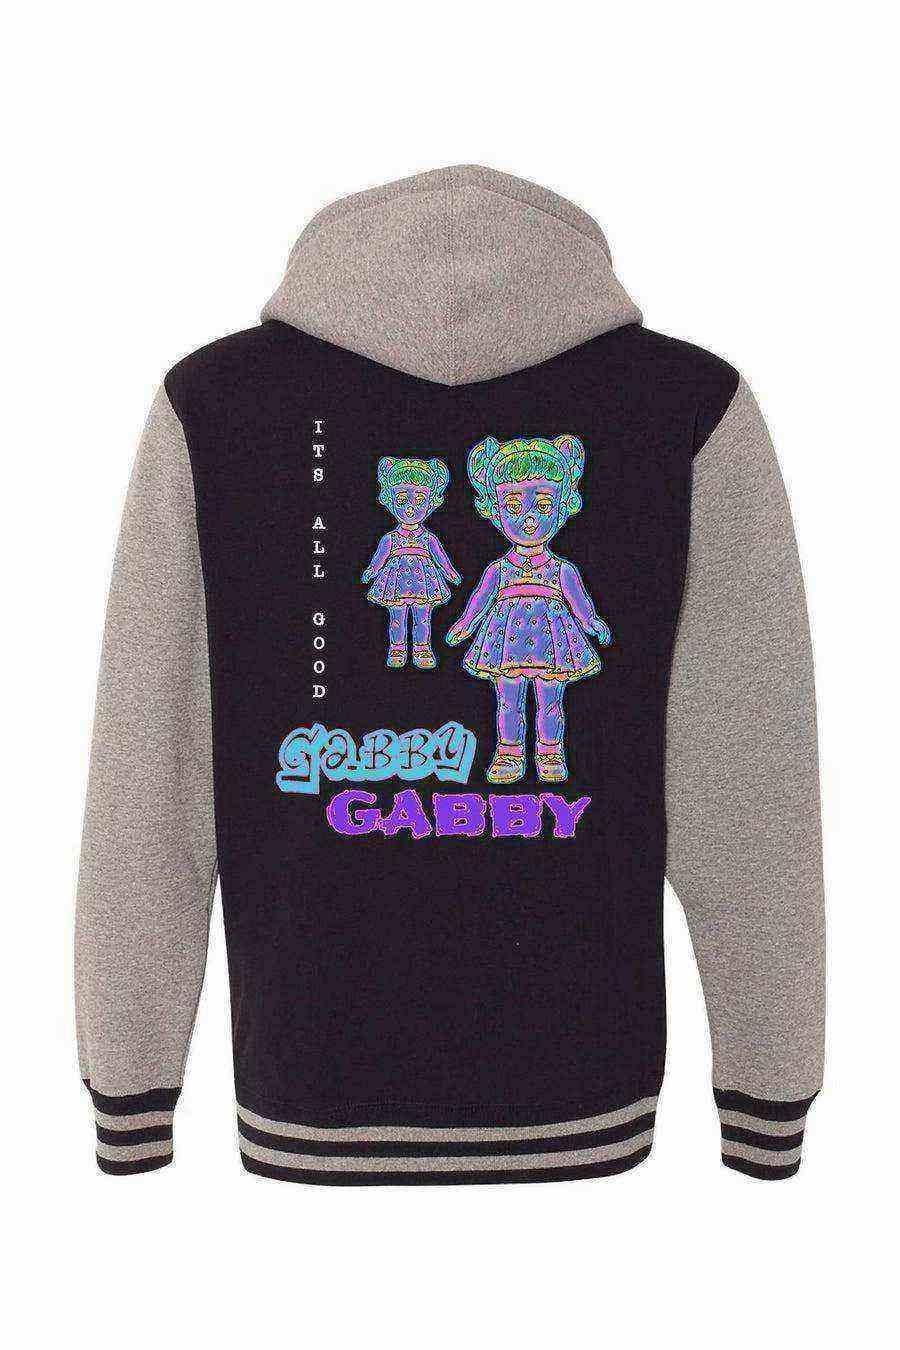 It’s All Good Gabby Gabby Varsity Jacket | Gabby Gabby Shirt | Song Lyrics Shirt | Music Mashup - Dylan's Tees